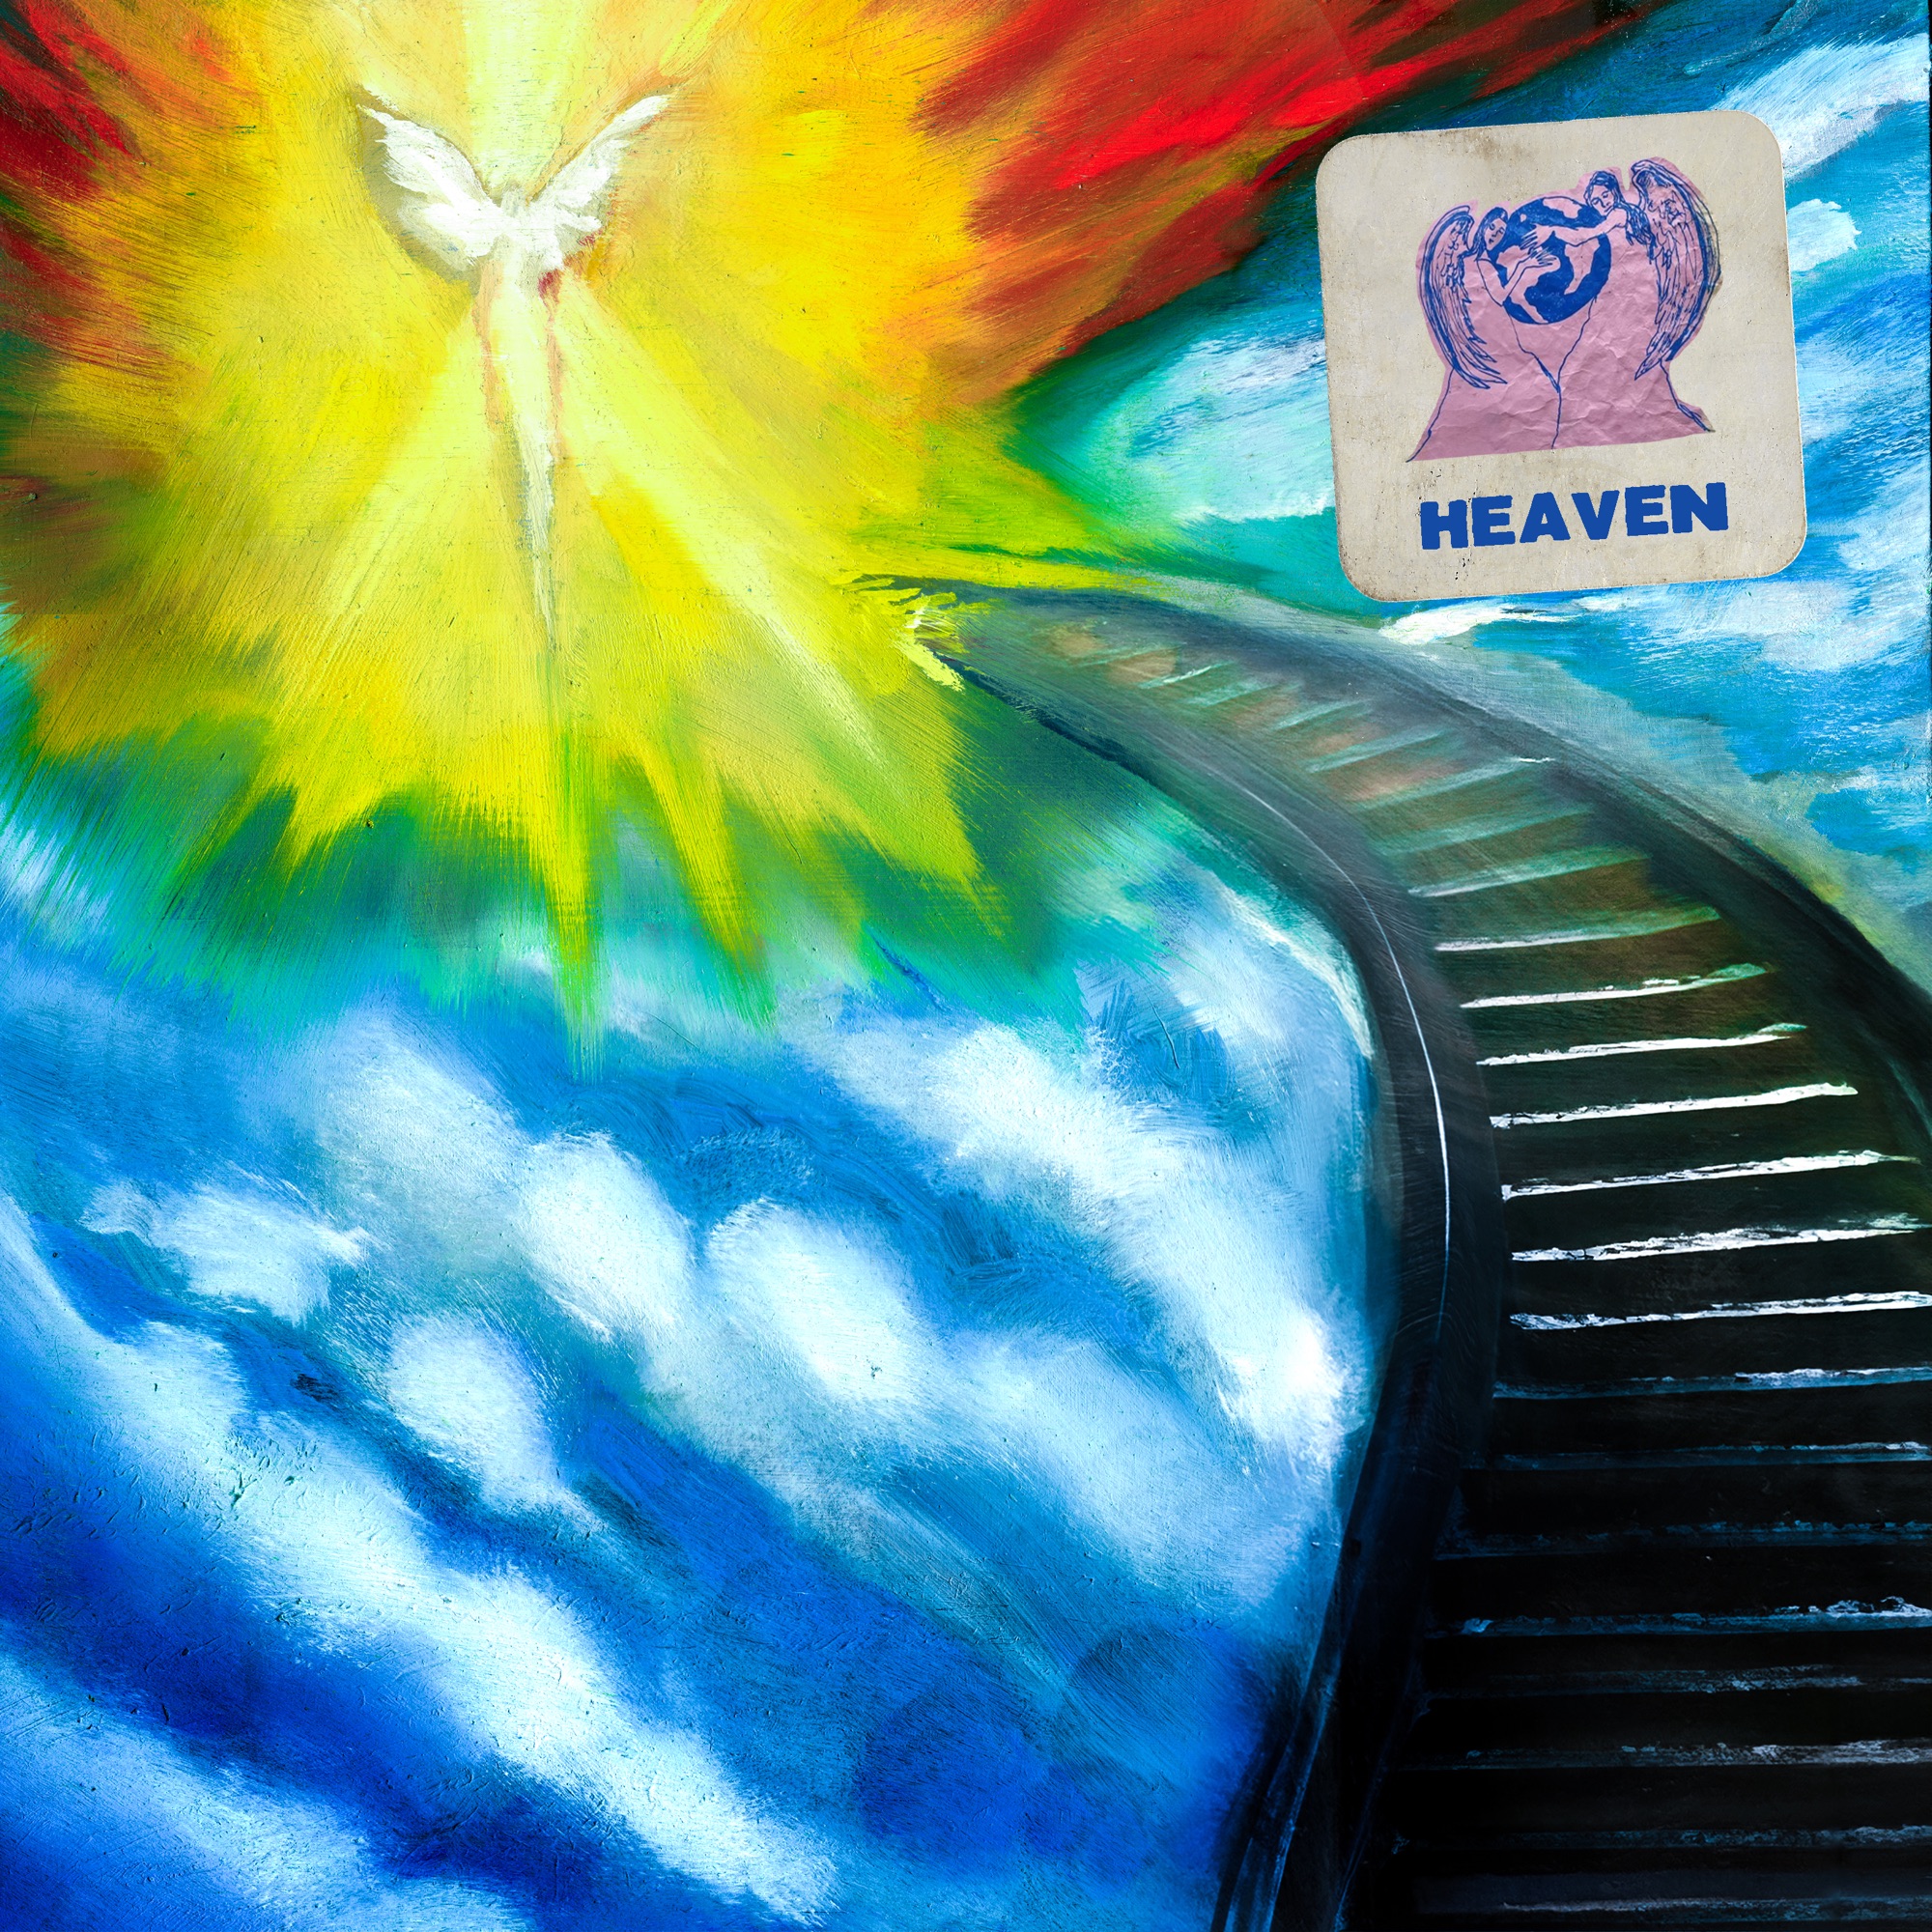 The Kid LAROI — HEAVEN cover artwork